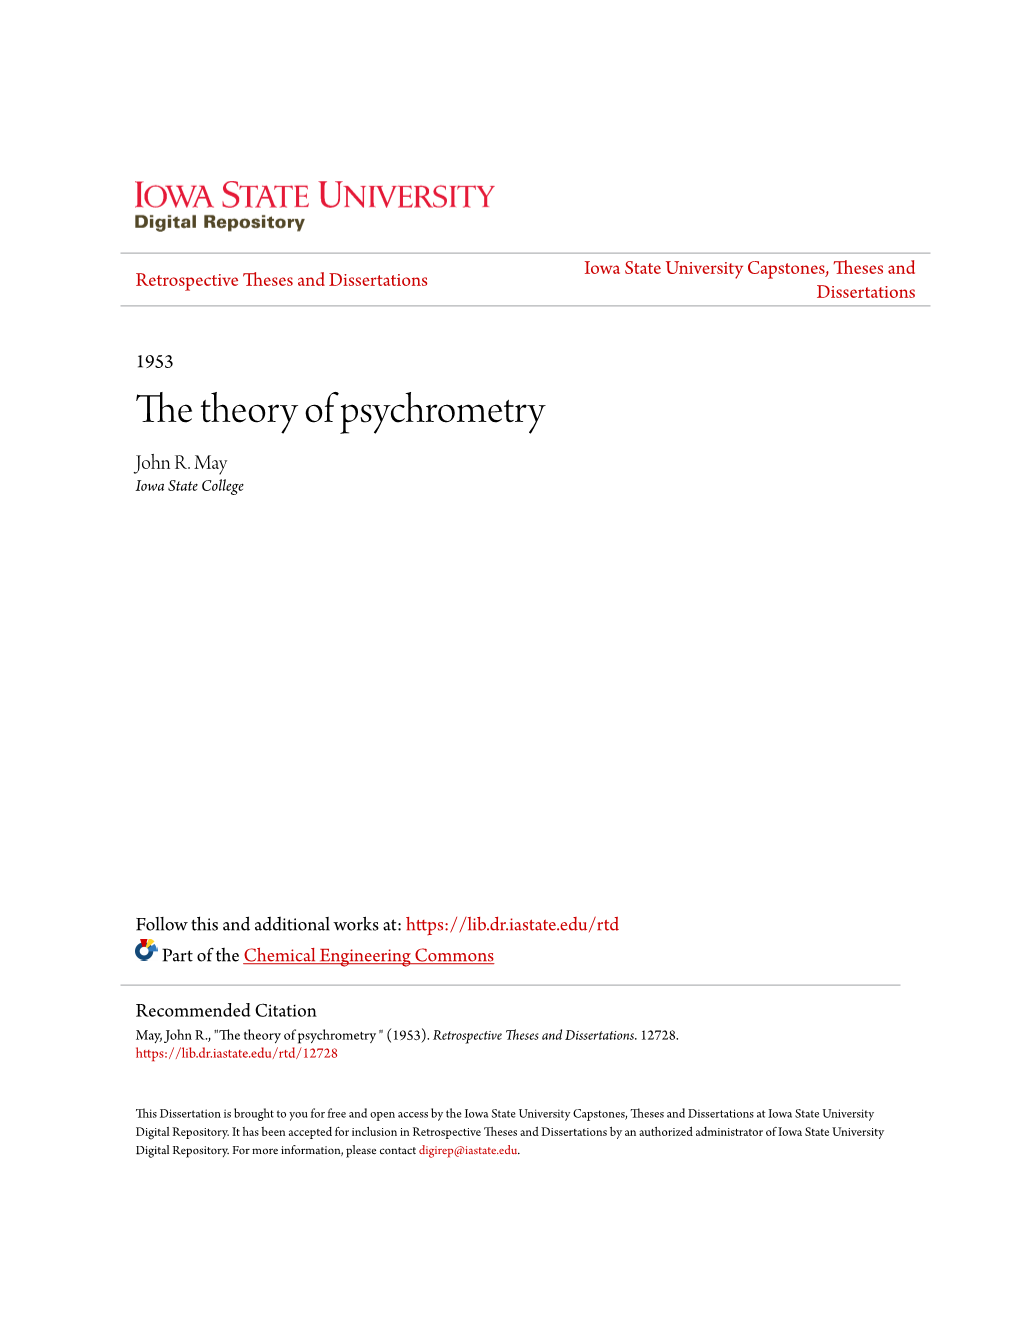 The Theory of Psychrometry John R